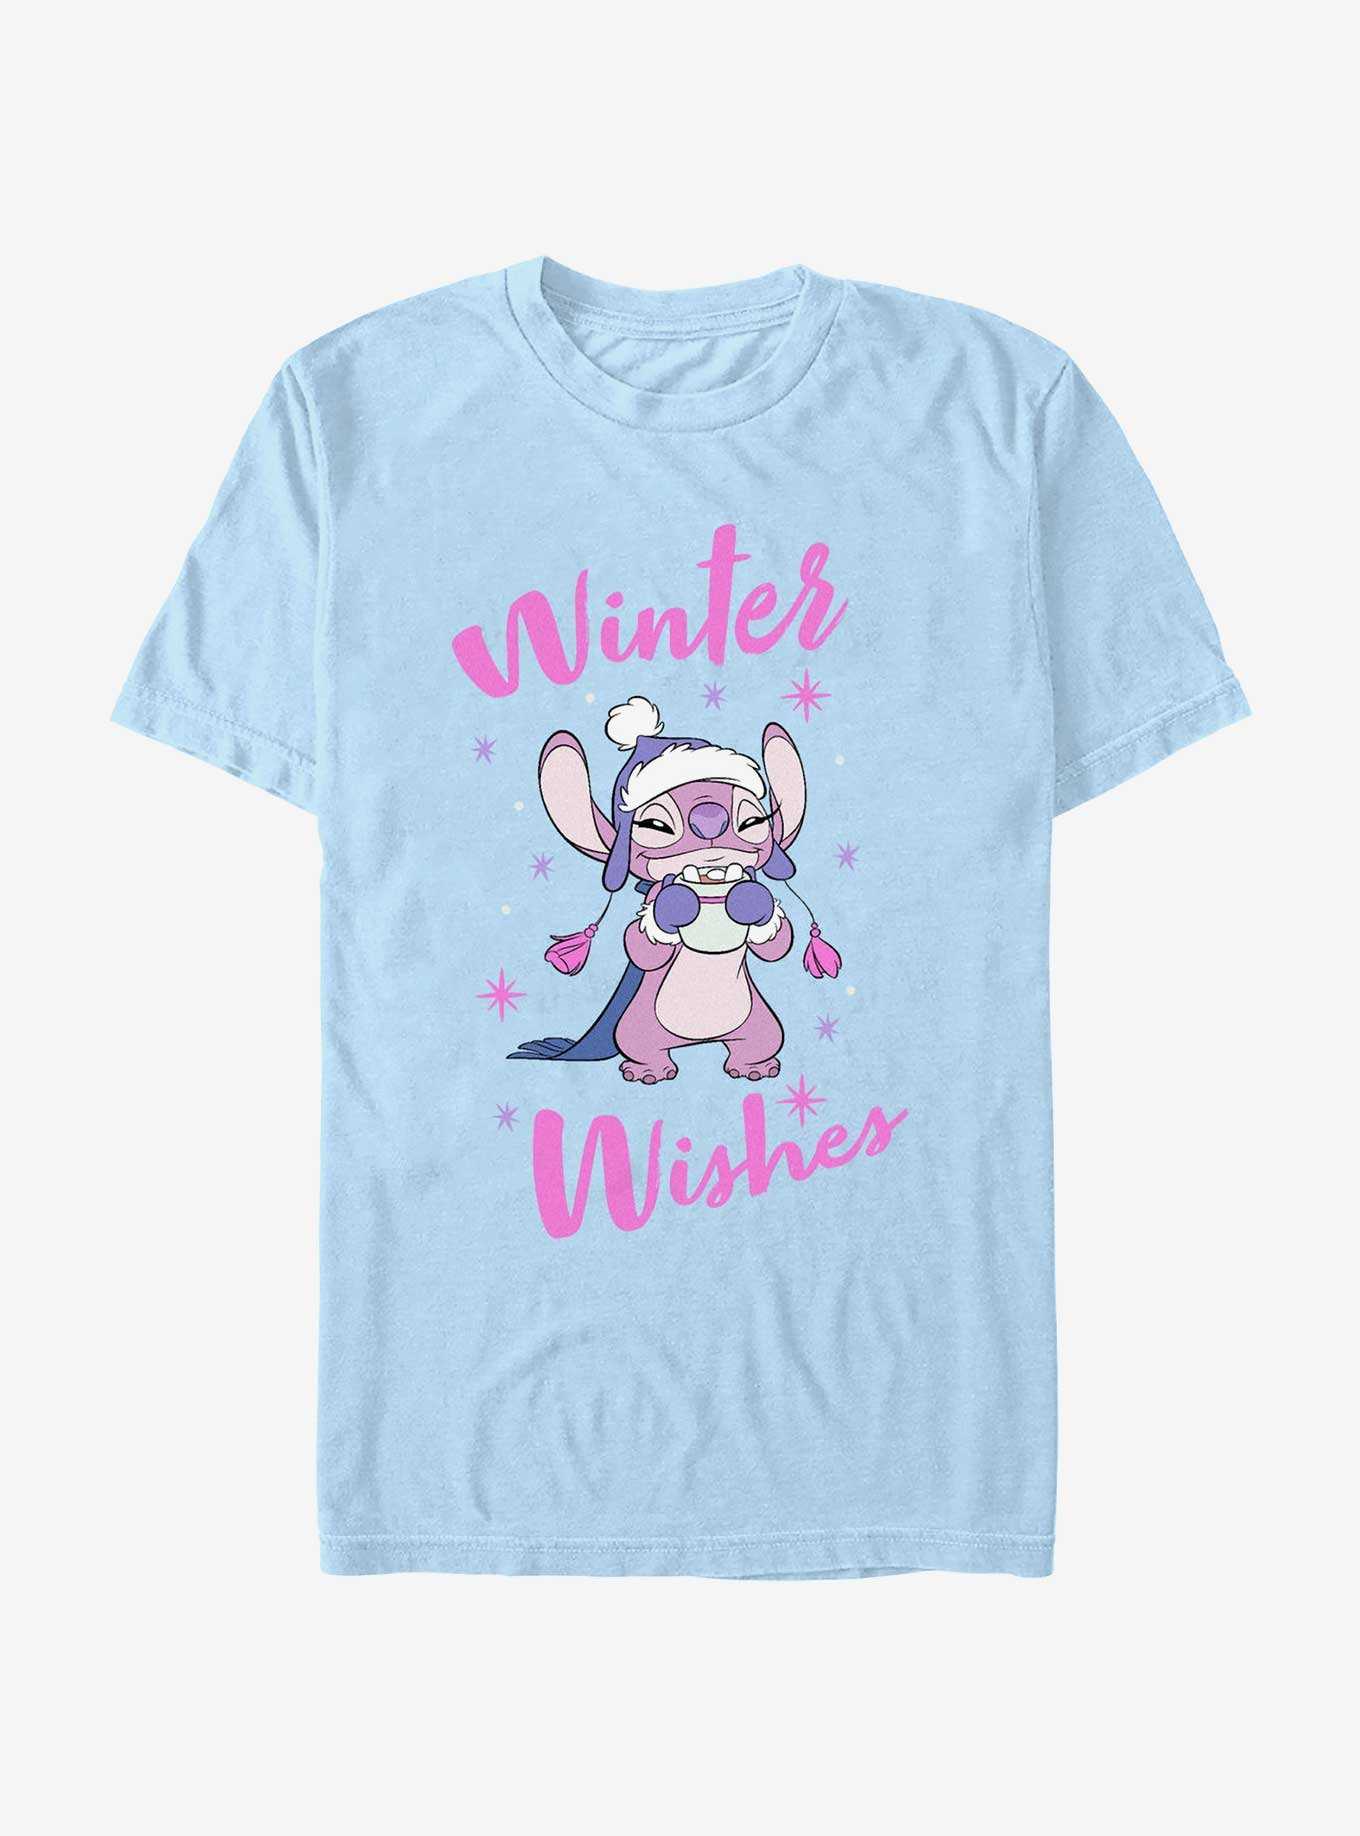 Disney Lilo & Stitch Angel Winter Wishes T-Shirt, , hi-res